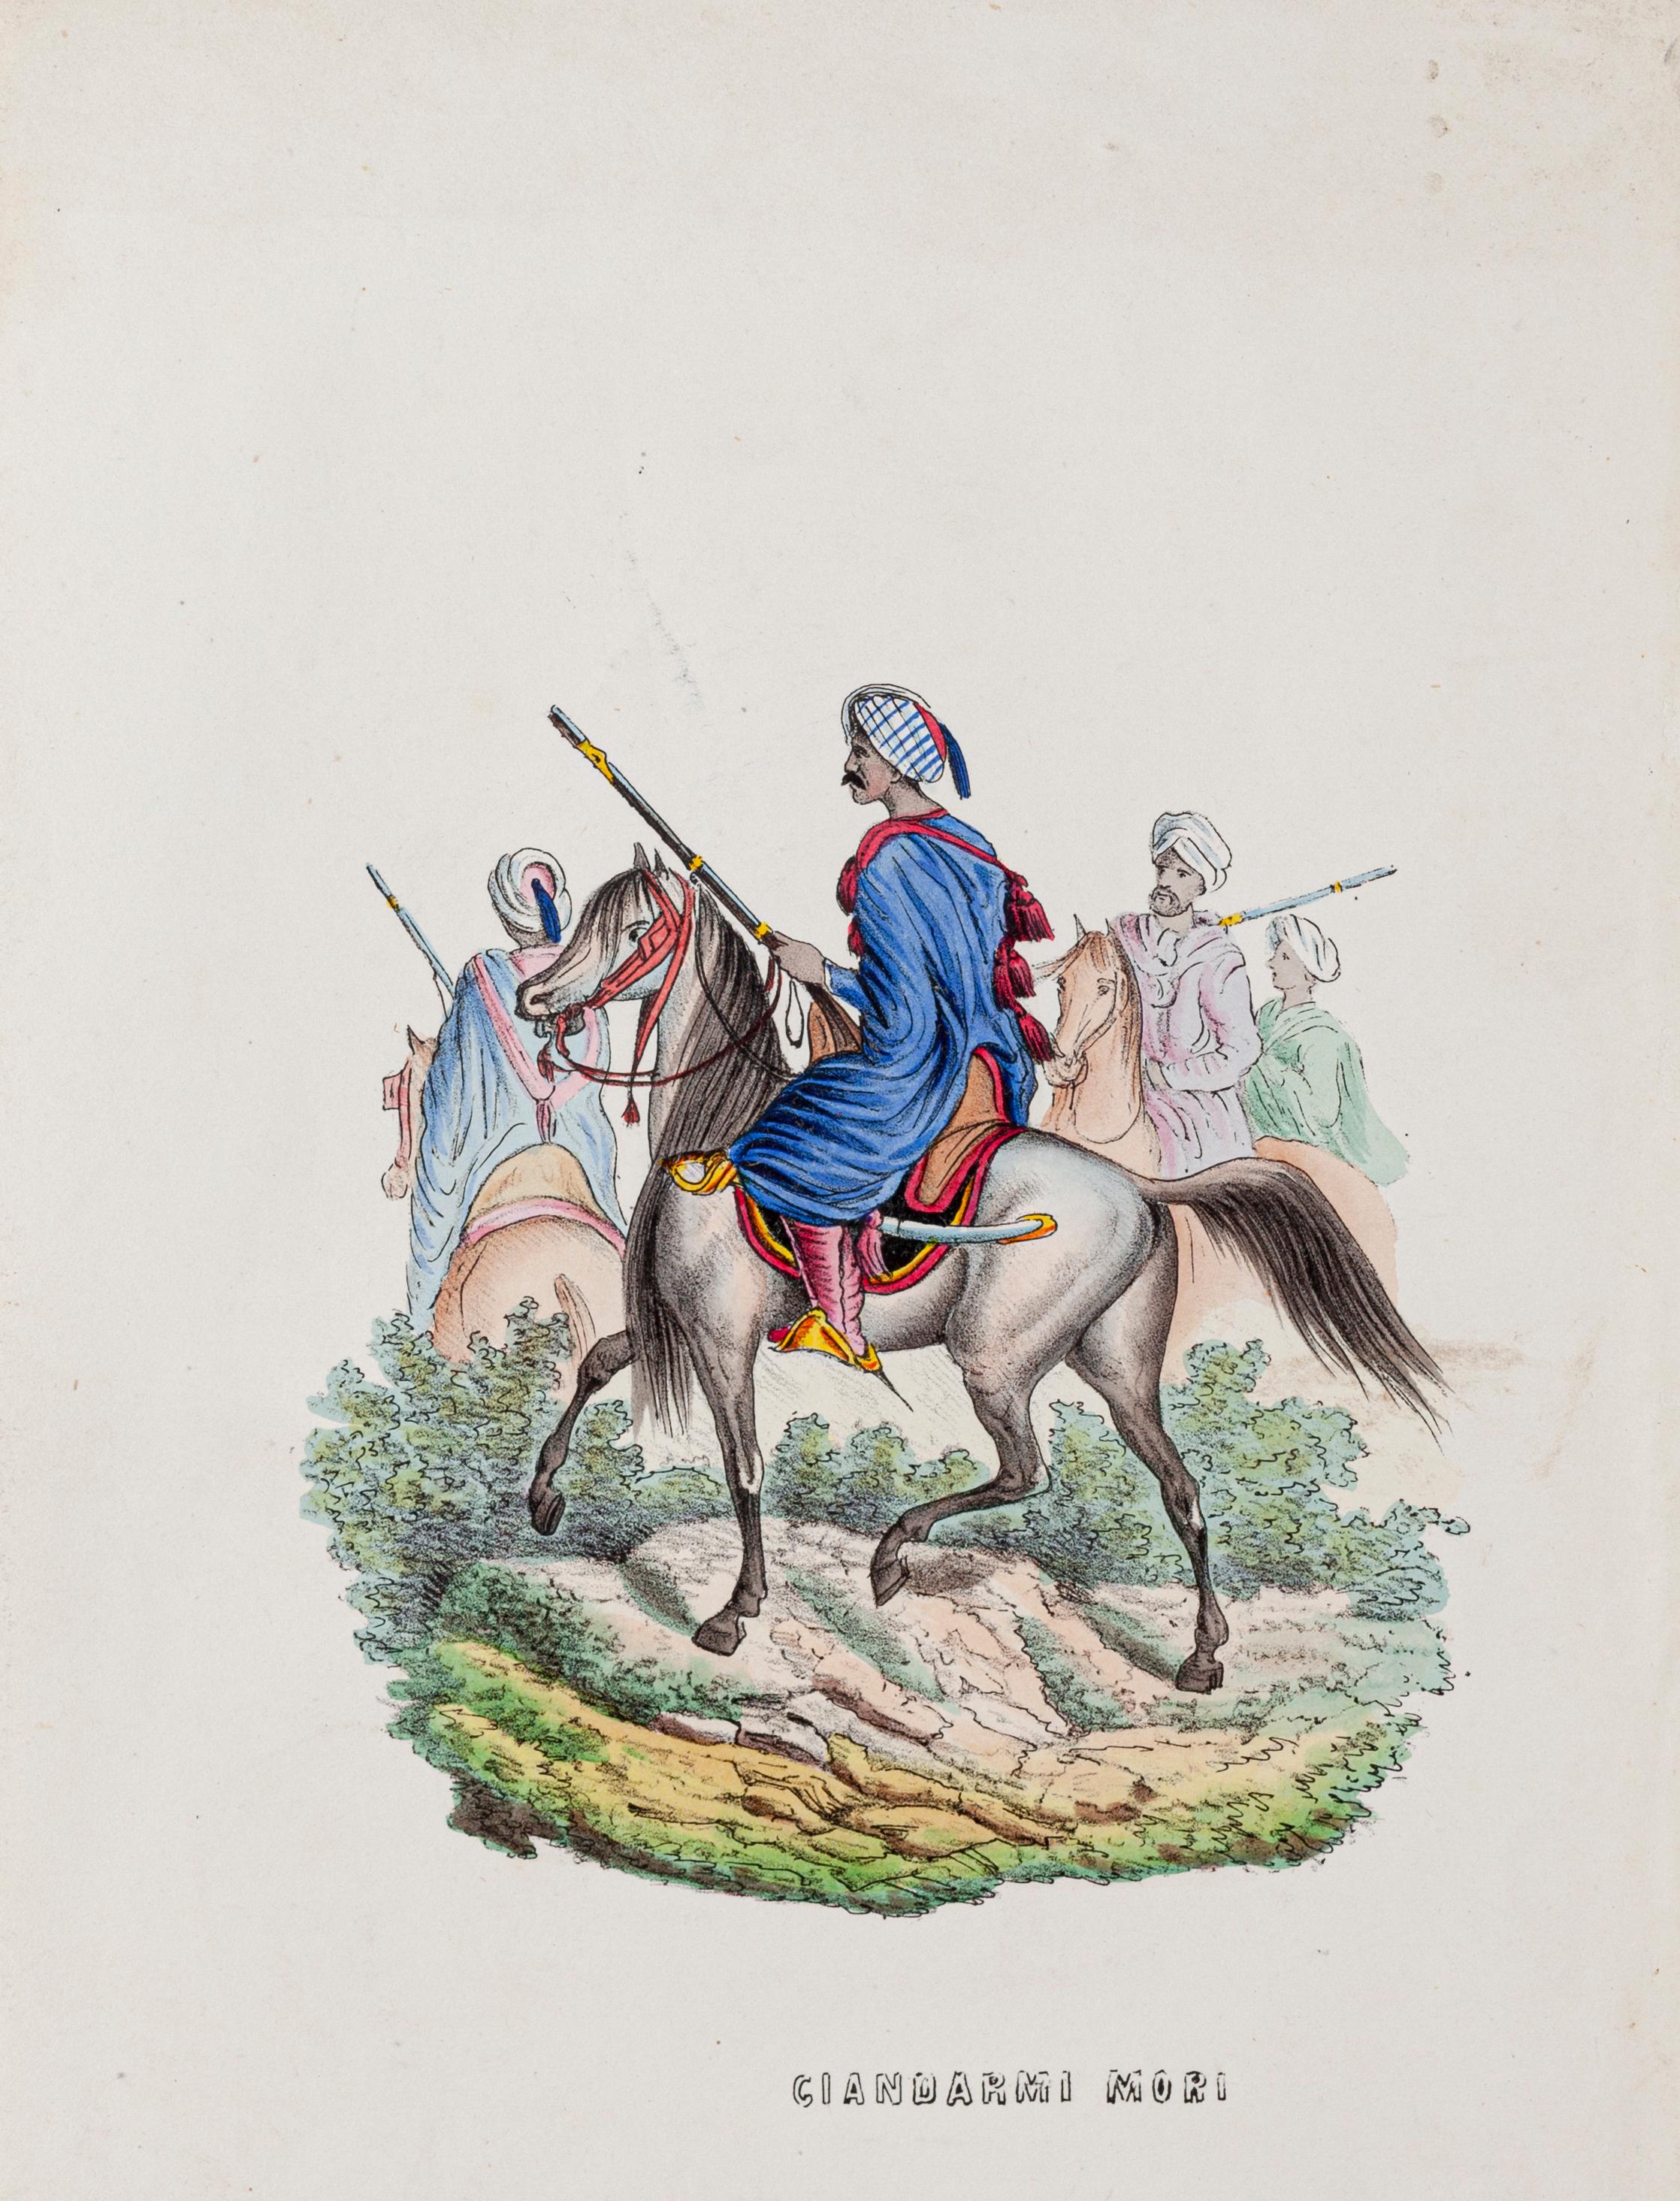 Unknown Figurative Print - Arab Soldiers (Giandarmi Mori) - Lithograph - 1849 